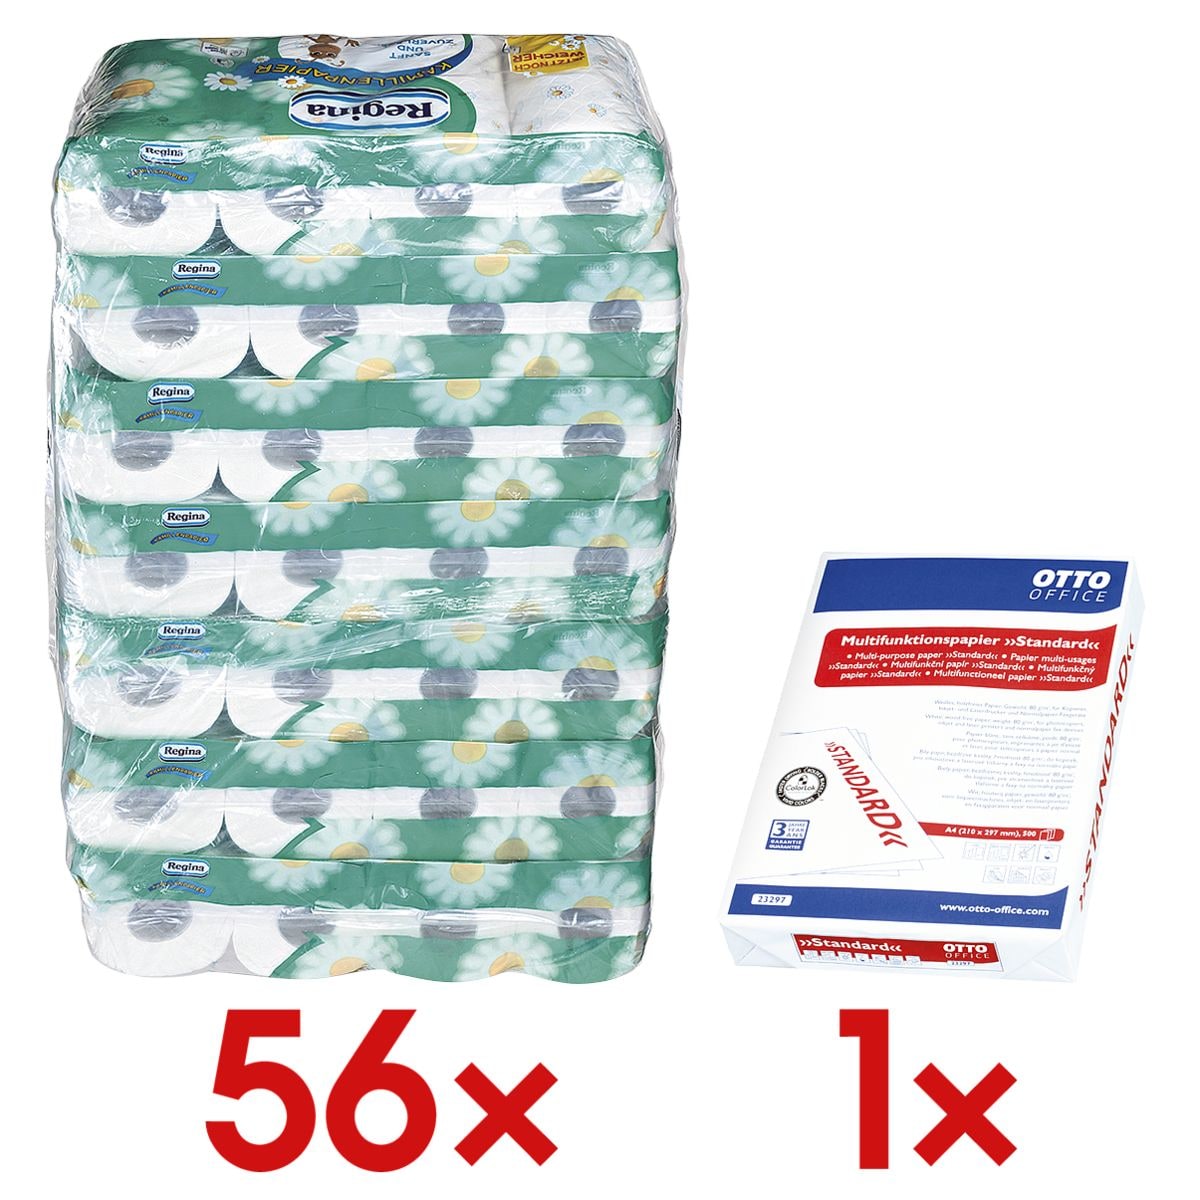 Regina Toilettenpapier Kamille 3-lagig, weiß - 56 Rollen (7 Pack à 8 Rollen) inkl. Multifunktionspapier »Standard«